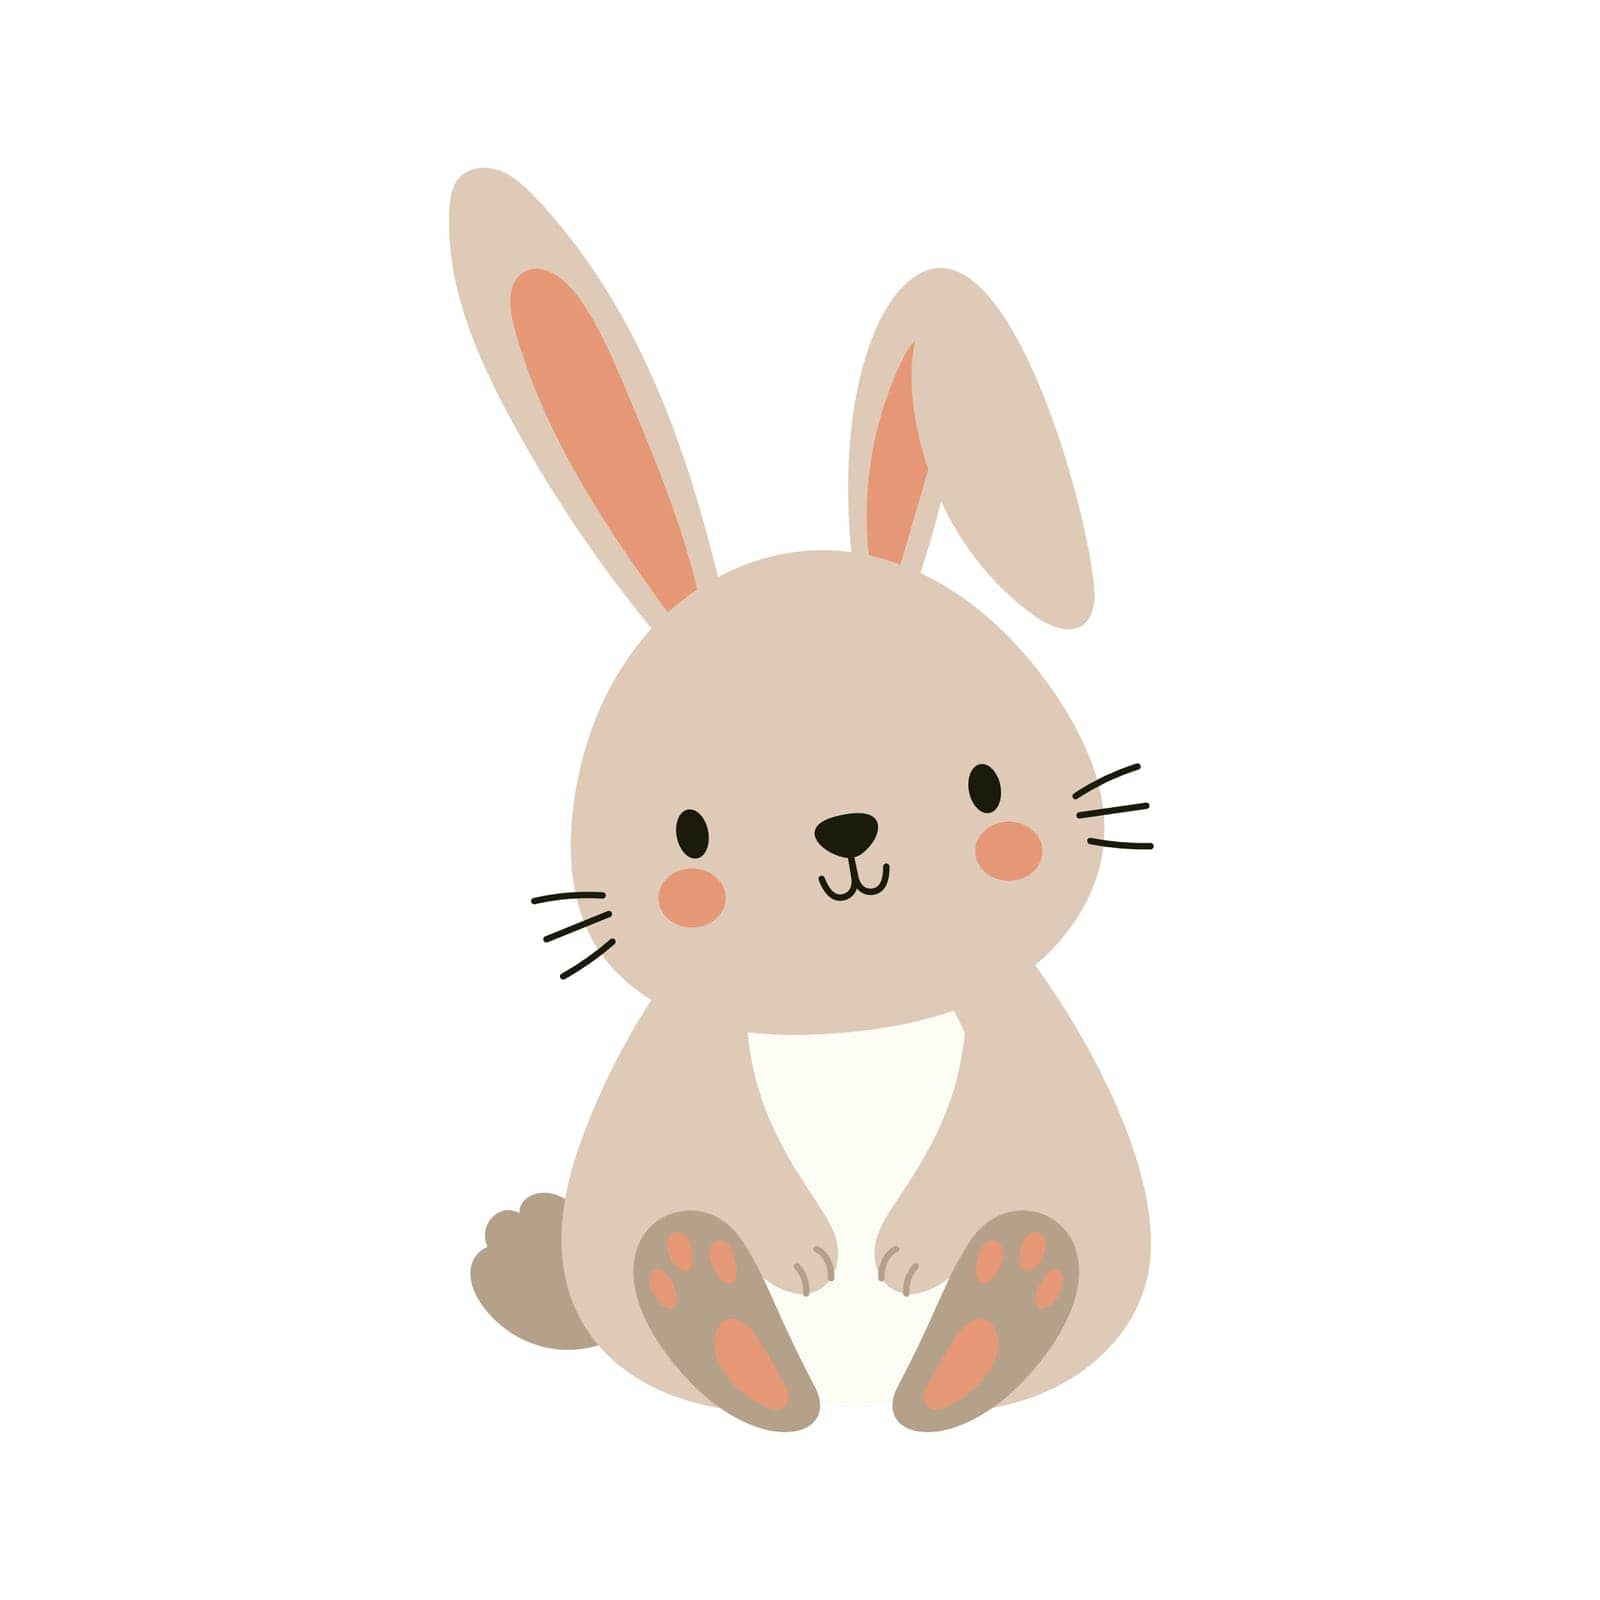 Cute boho little Easter bunny. Cartoon whimsical rabbit character for kids cards, baby shower, invitation, poster. Vector stock illustration.